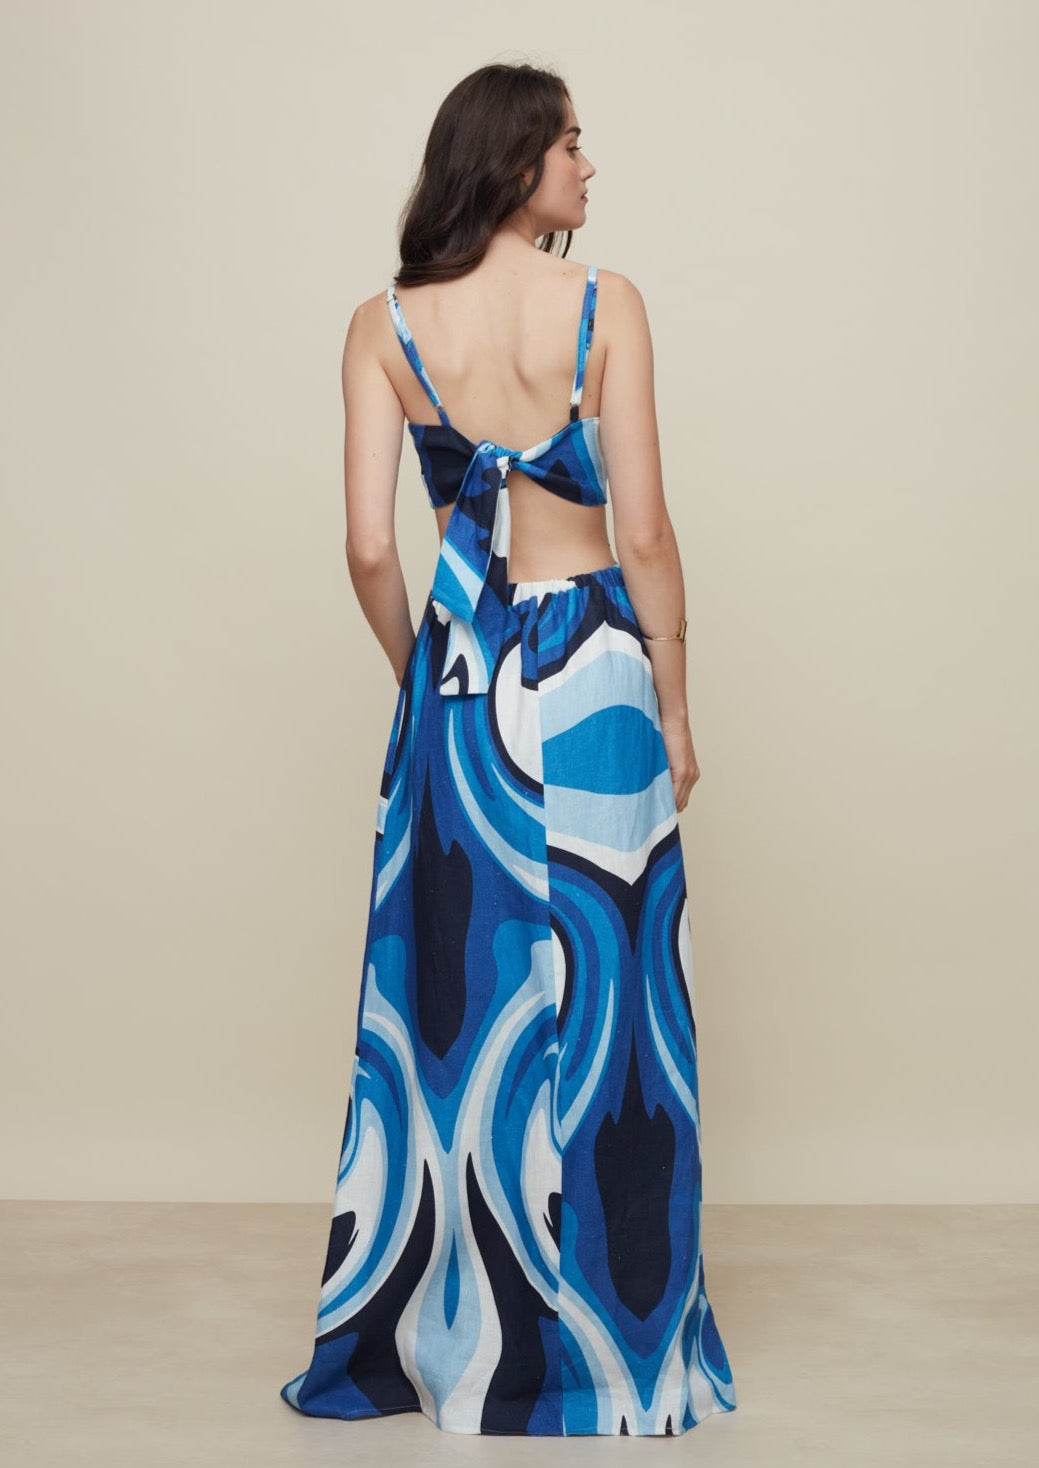 Galeria-Lily Liquid Blue Dress-Justbrazil